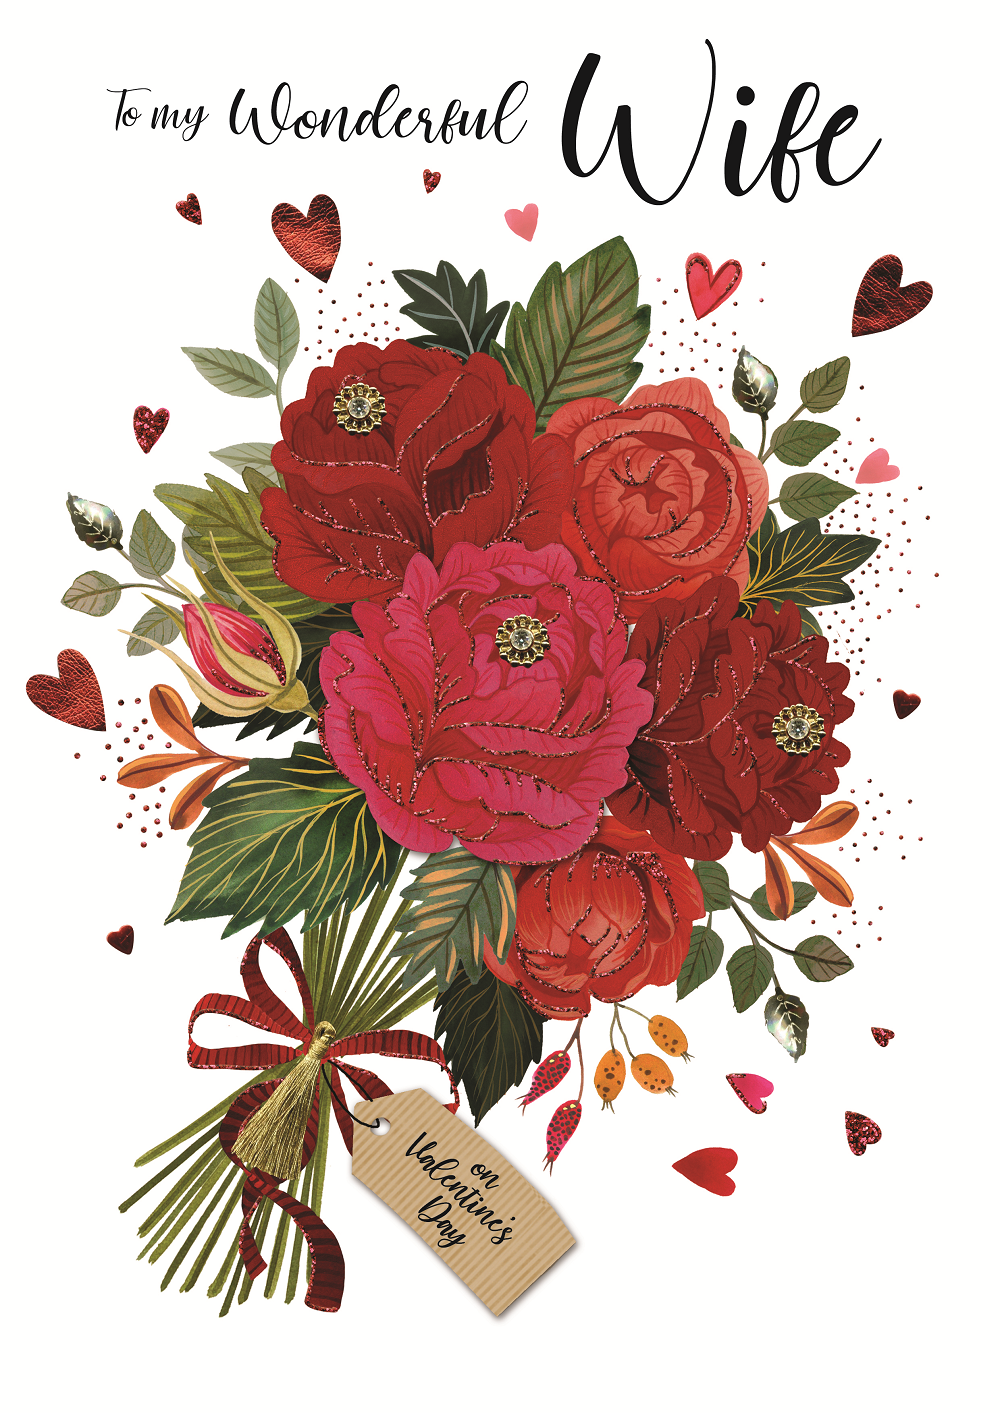 Wonderful Wife Embellished Valentine's Day Greeting Card